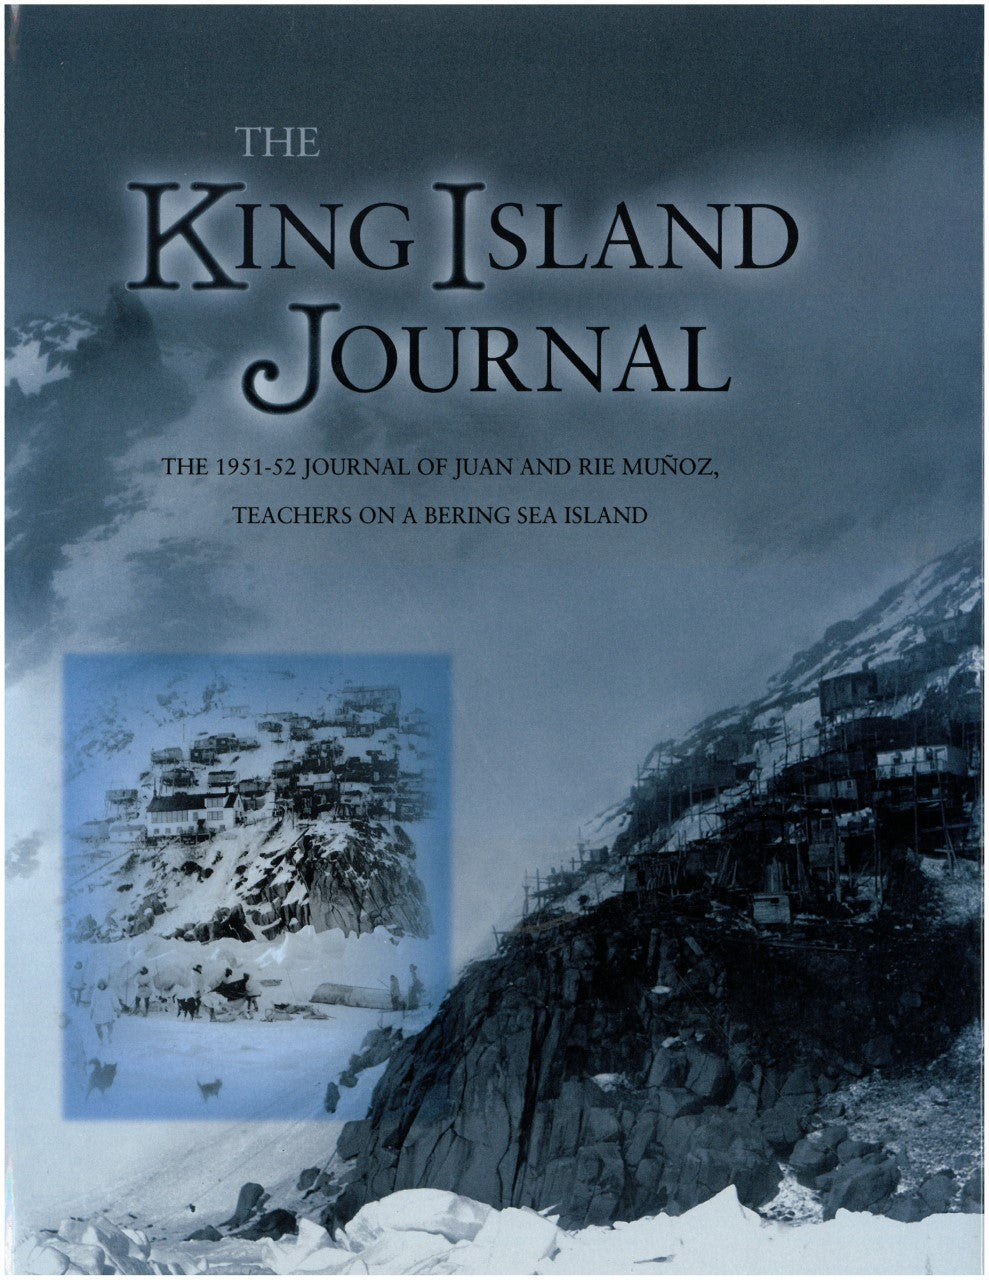 The King Island Journal by Juan Munoz Jr.